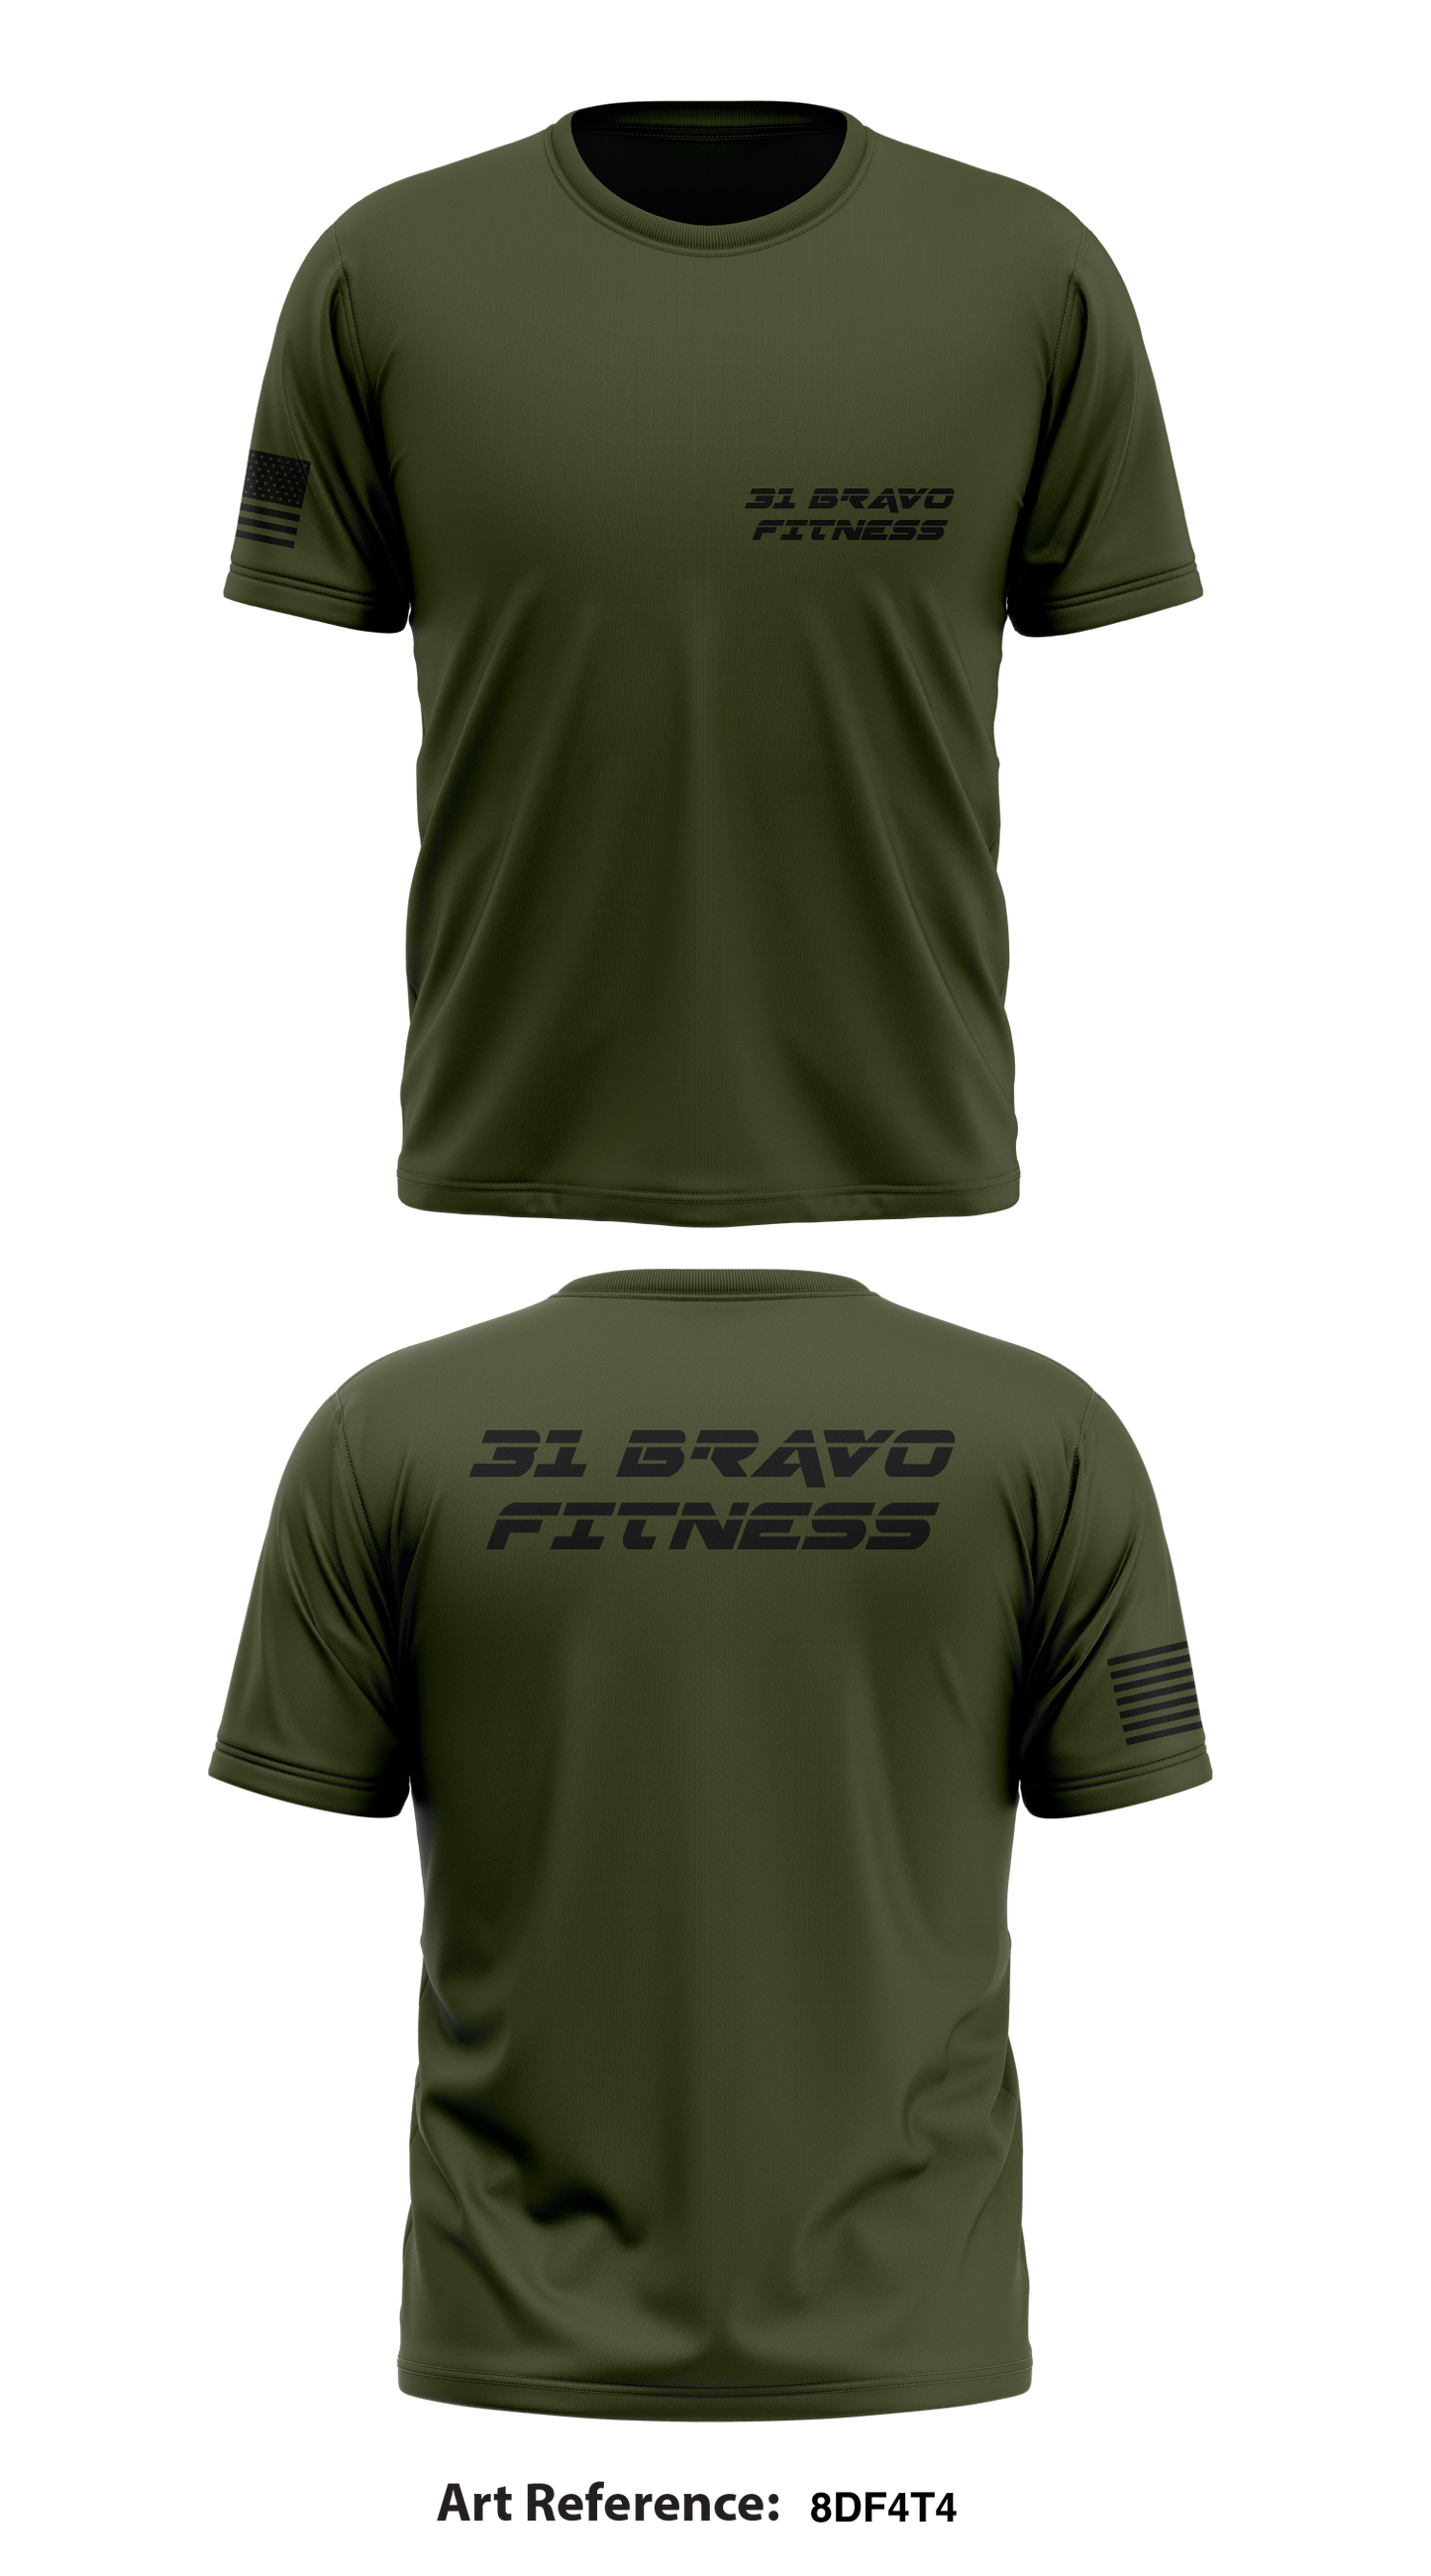 31 Bravo Fitness Store 1 Core Men's SS Performance Tee - 8DF4t4